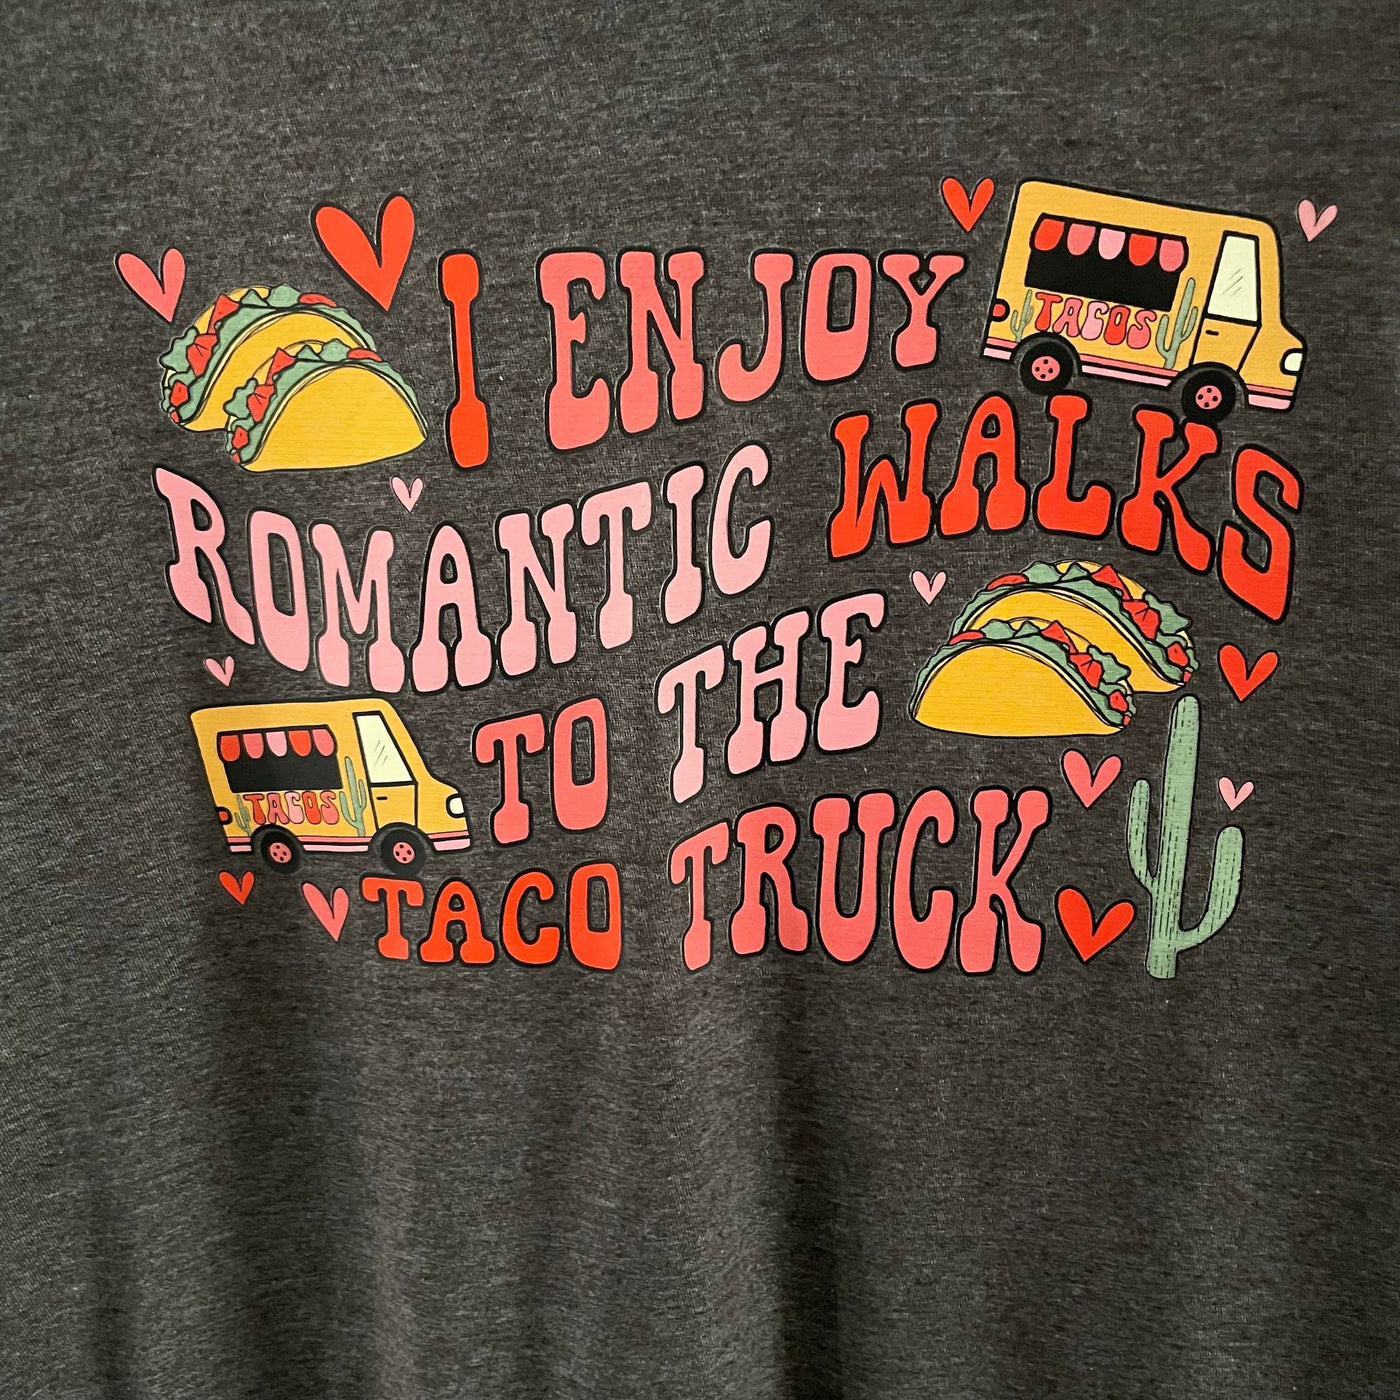 I Enjoy Romantic Walks to the Taco Truck Graphic Tee